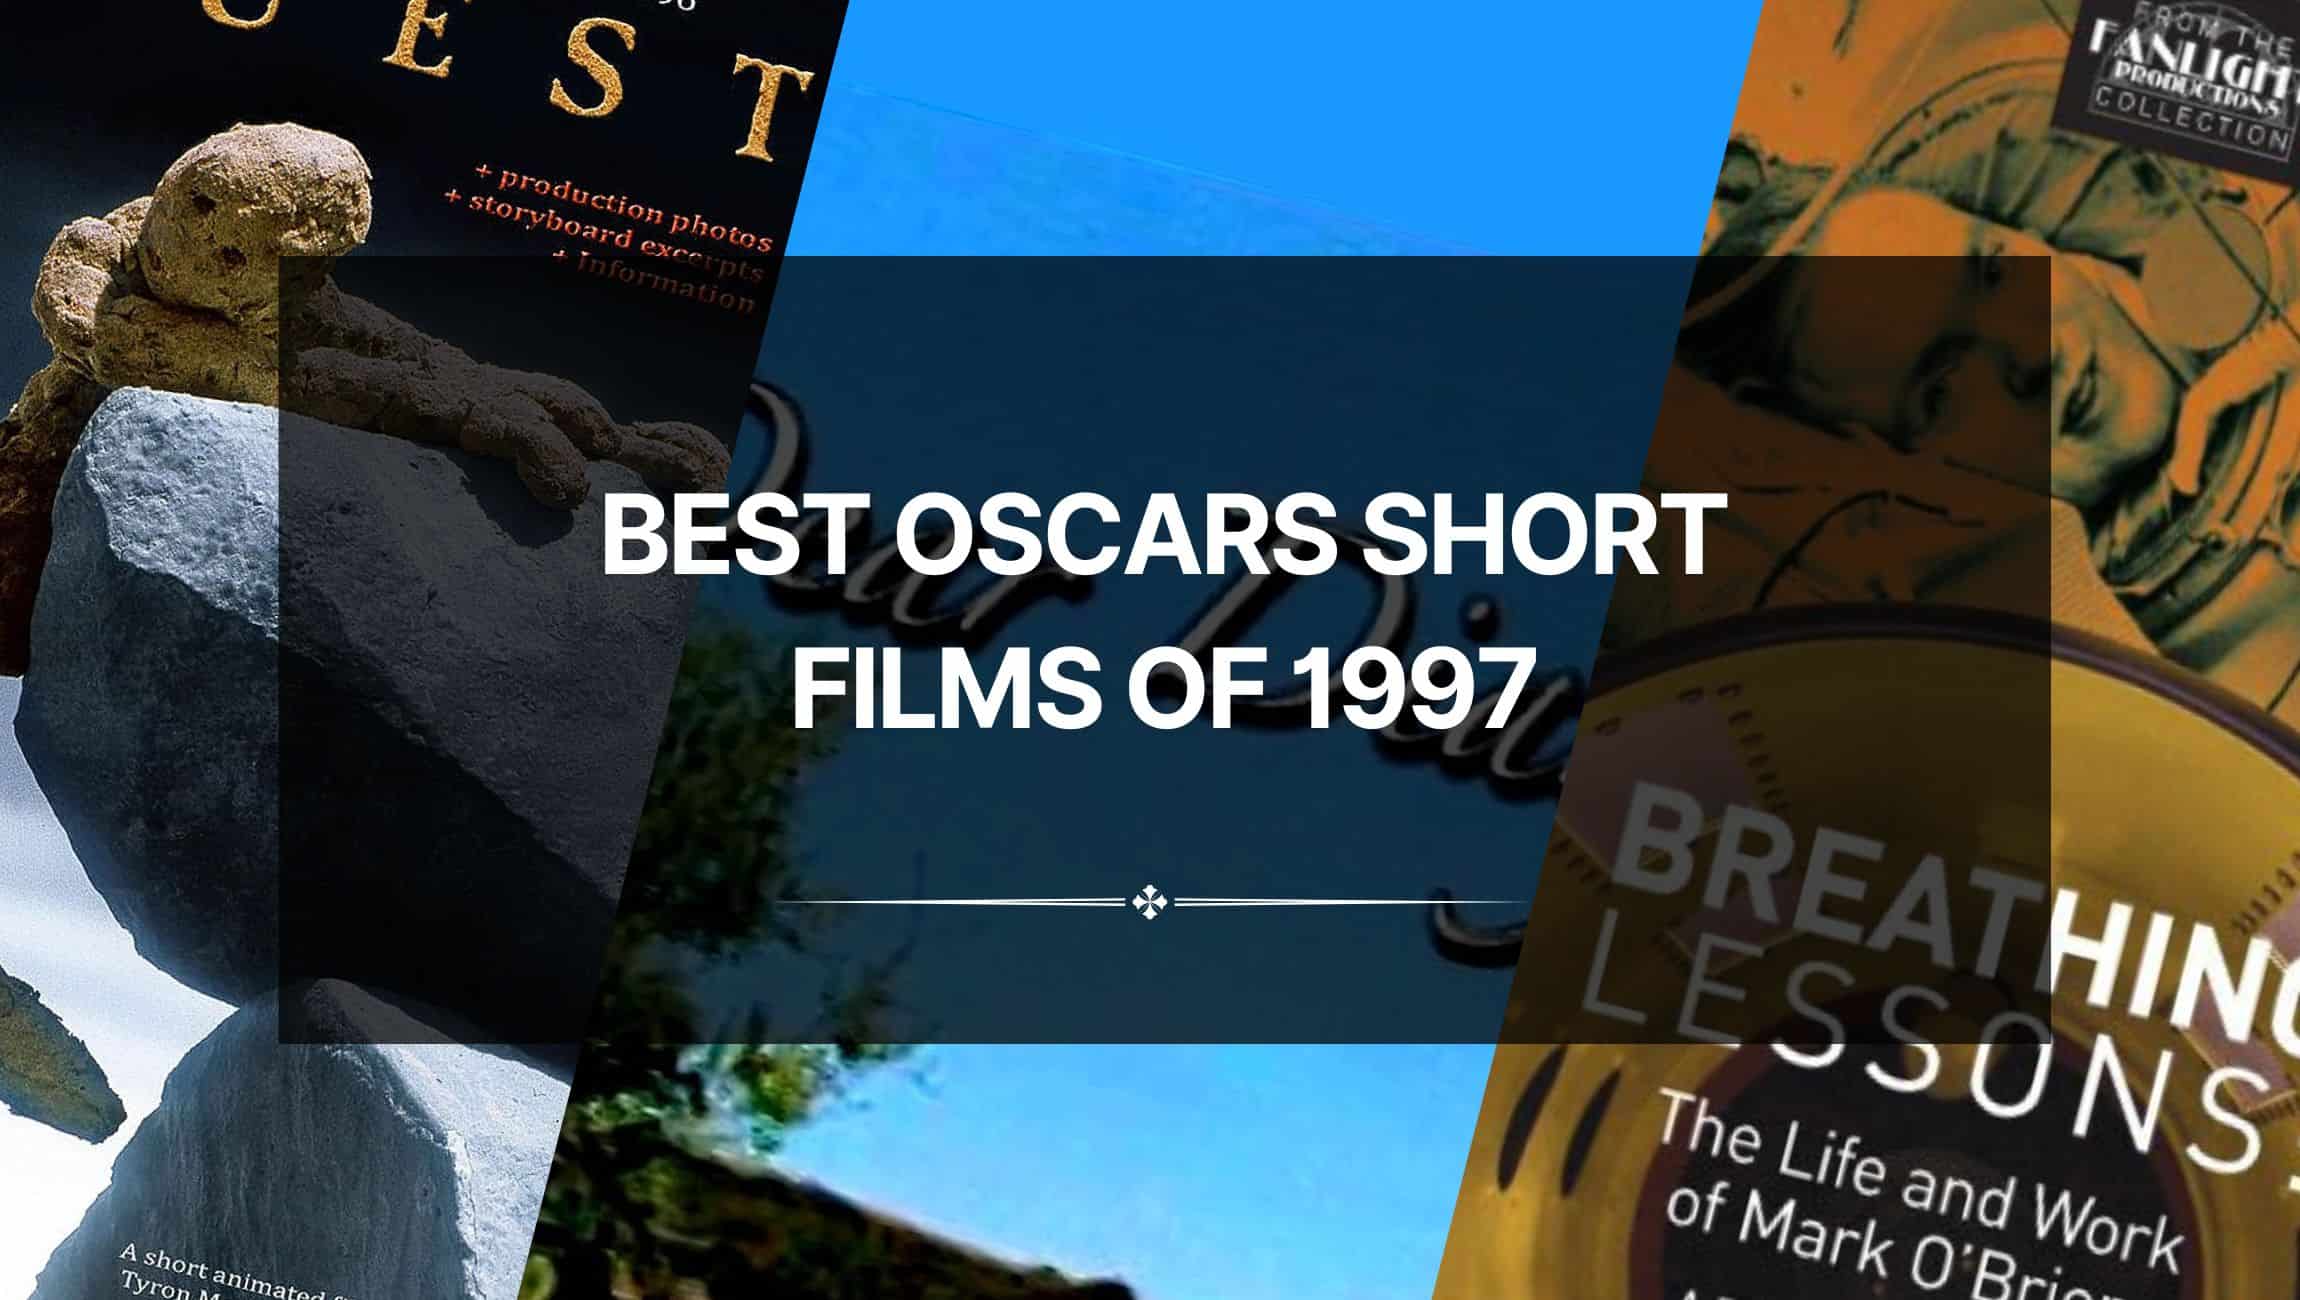 Best Oscars Short Films of 1997